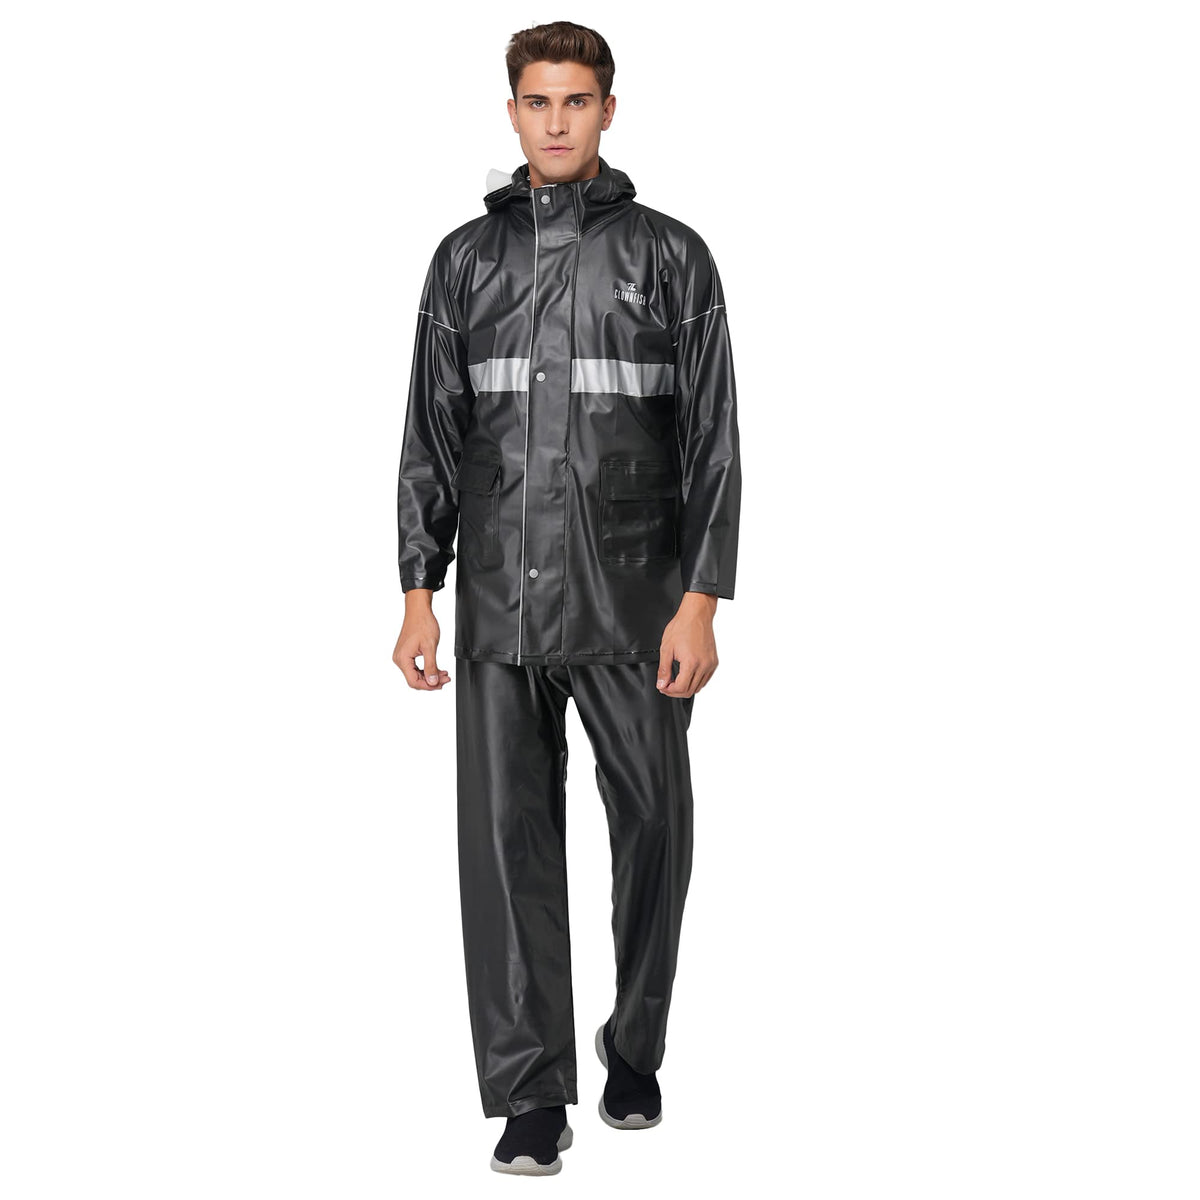 THE CLOWNFISH Rain Coat for Men Waterproof for Bike Raincoat for Men with Hood PVC Material. Set of Top and Bottom. Azure Pro Series (Black, X-Large)